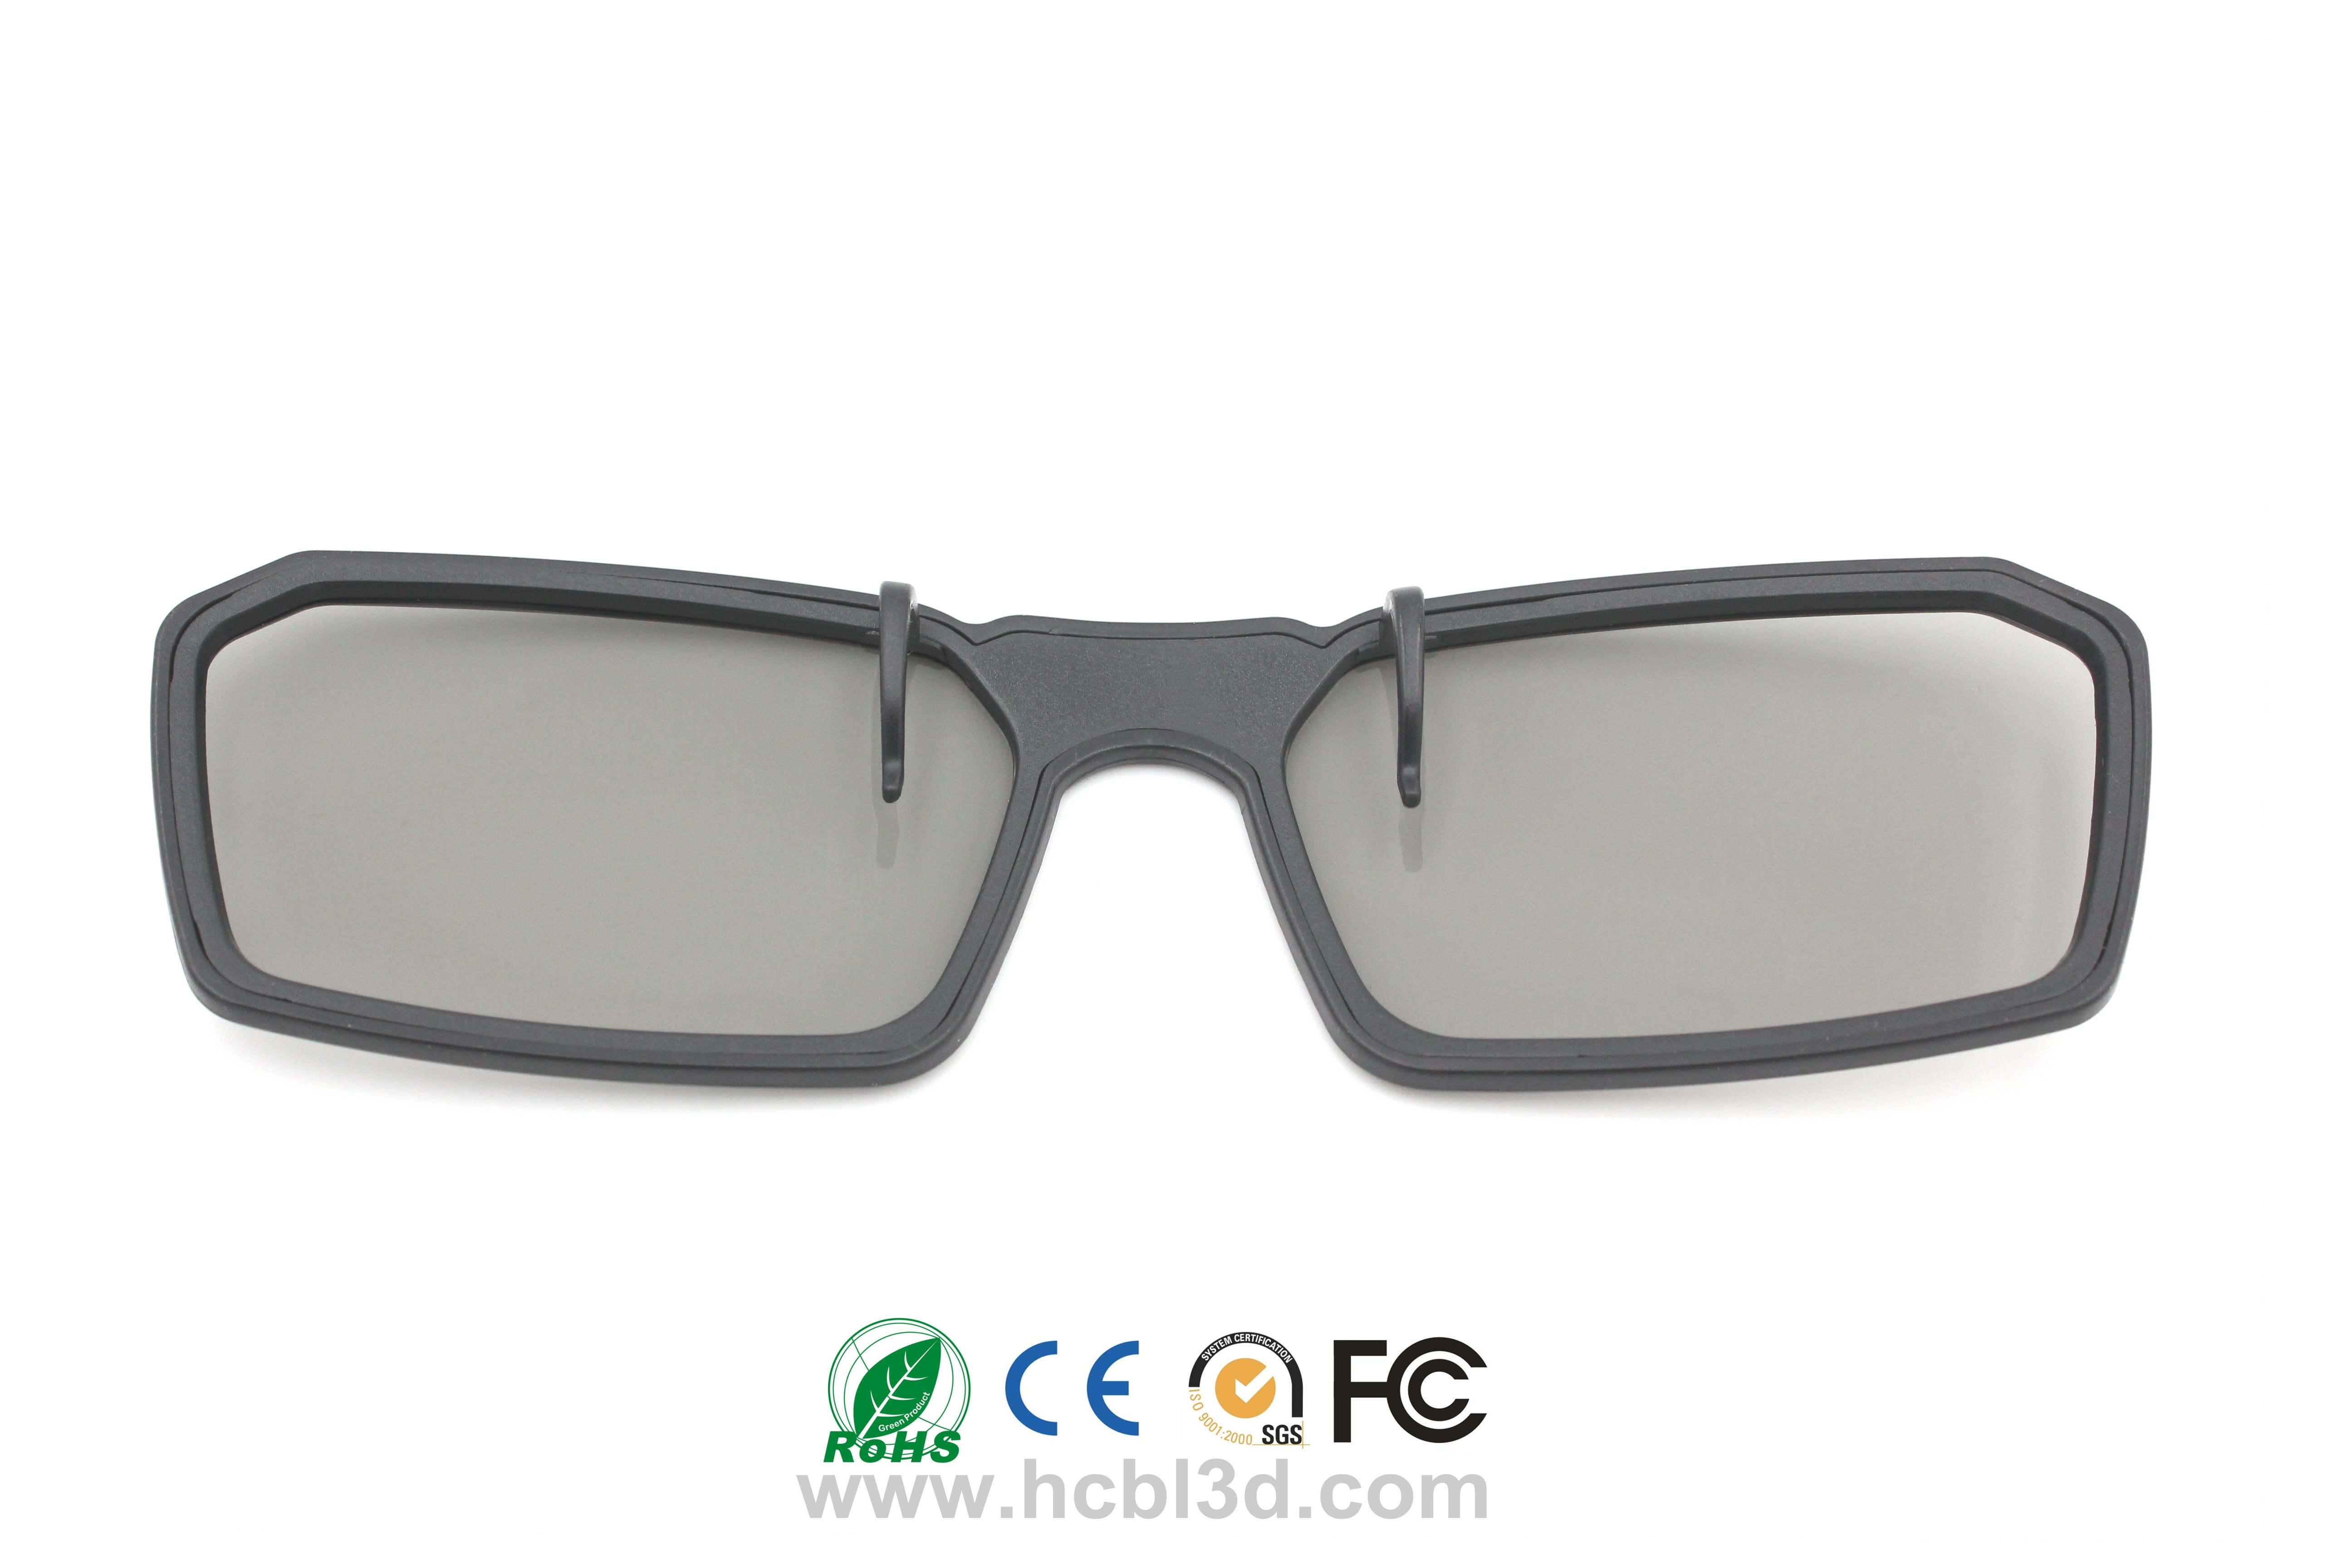 Gafas 3D miópicas Con lentes polarizadas circulares / lineales / Gafas 3D desechables / reciclables Pasivas